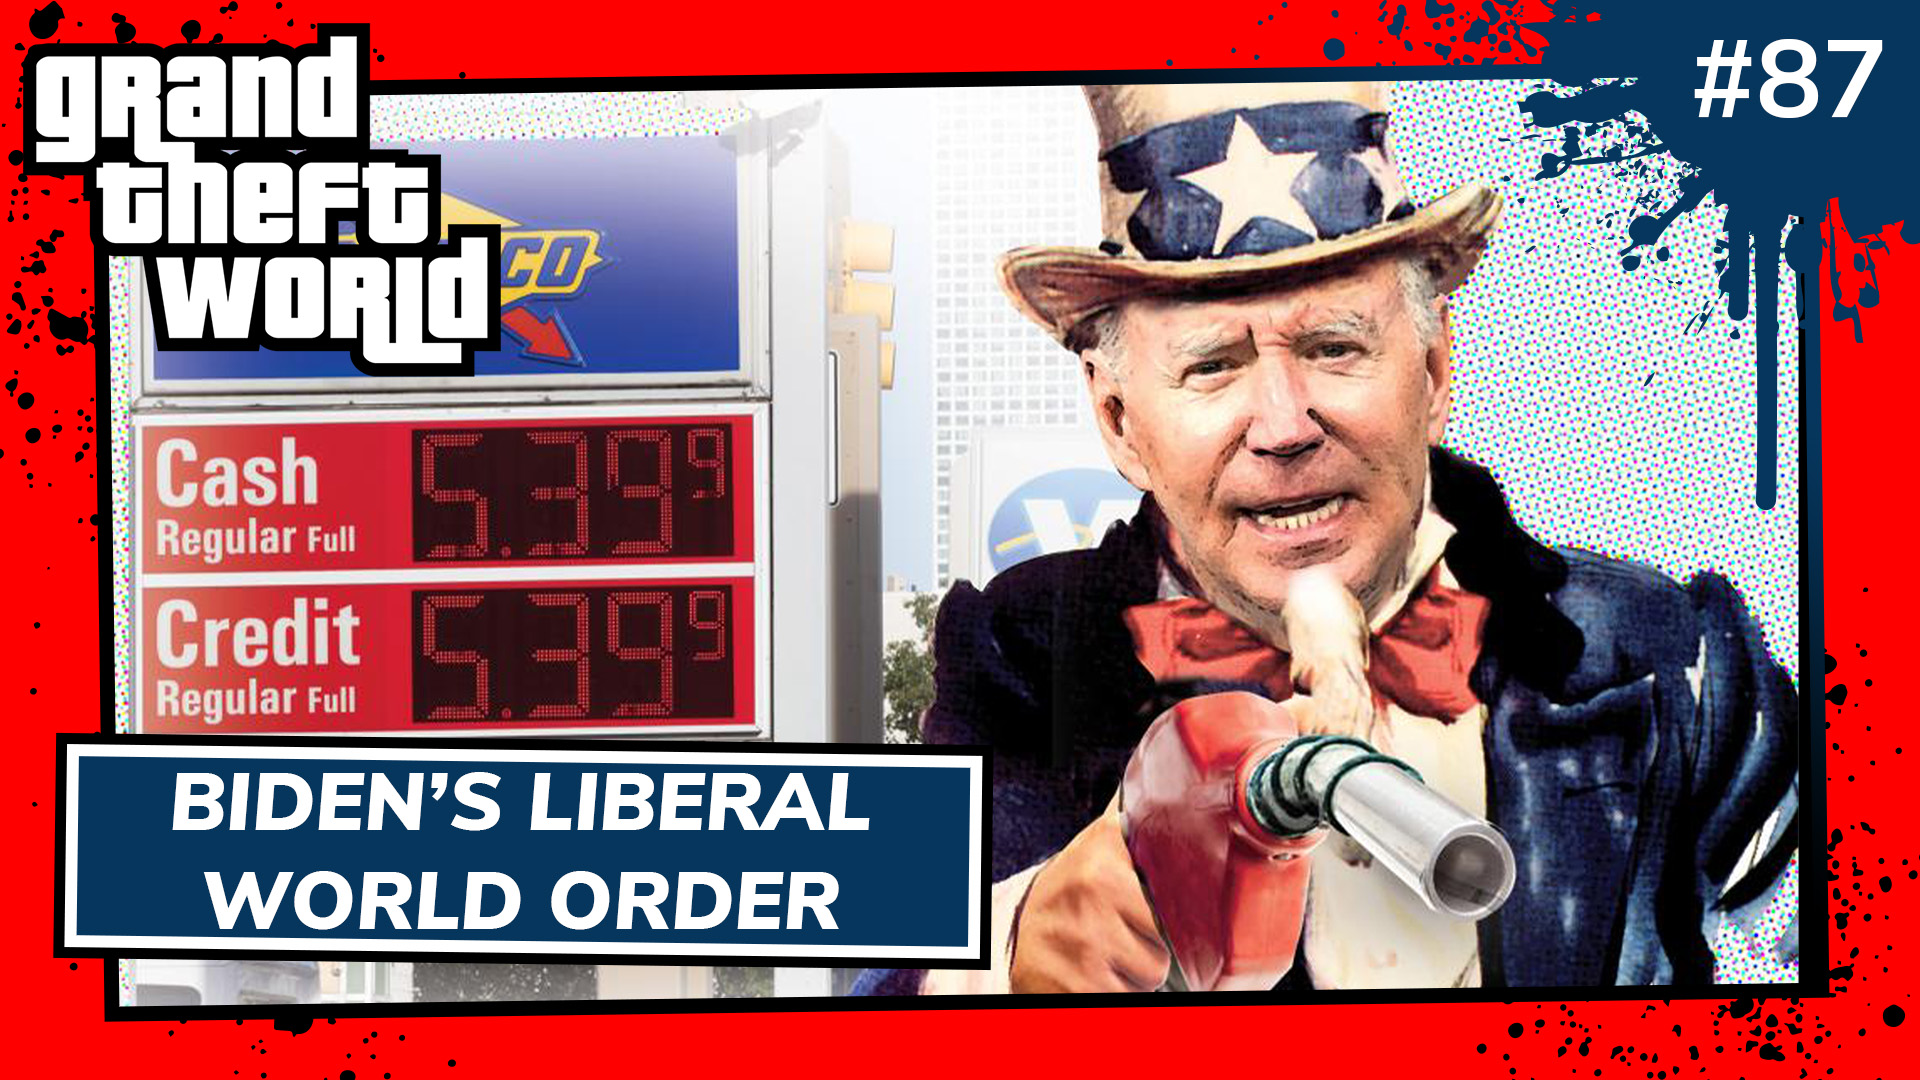 Grand Theft World Podcast 087 | Biden’s Liberal World Order